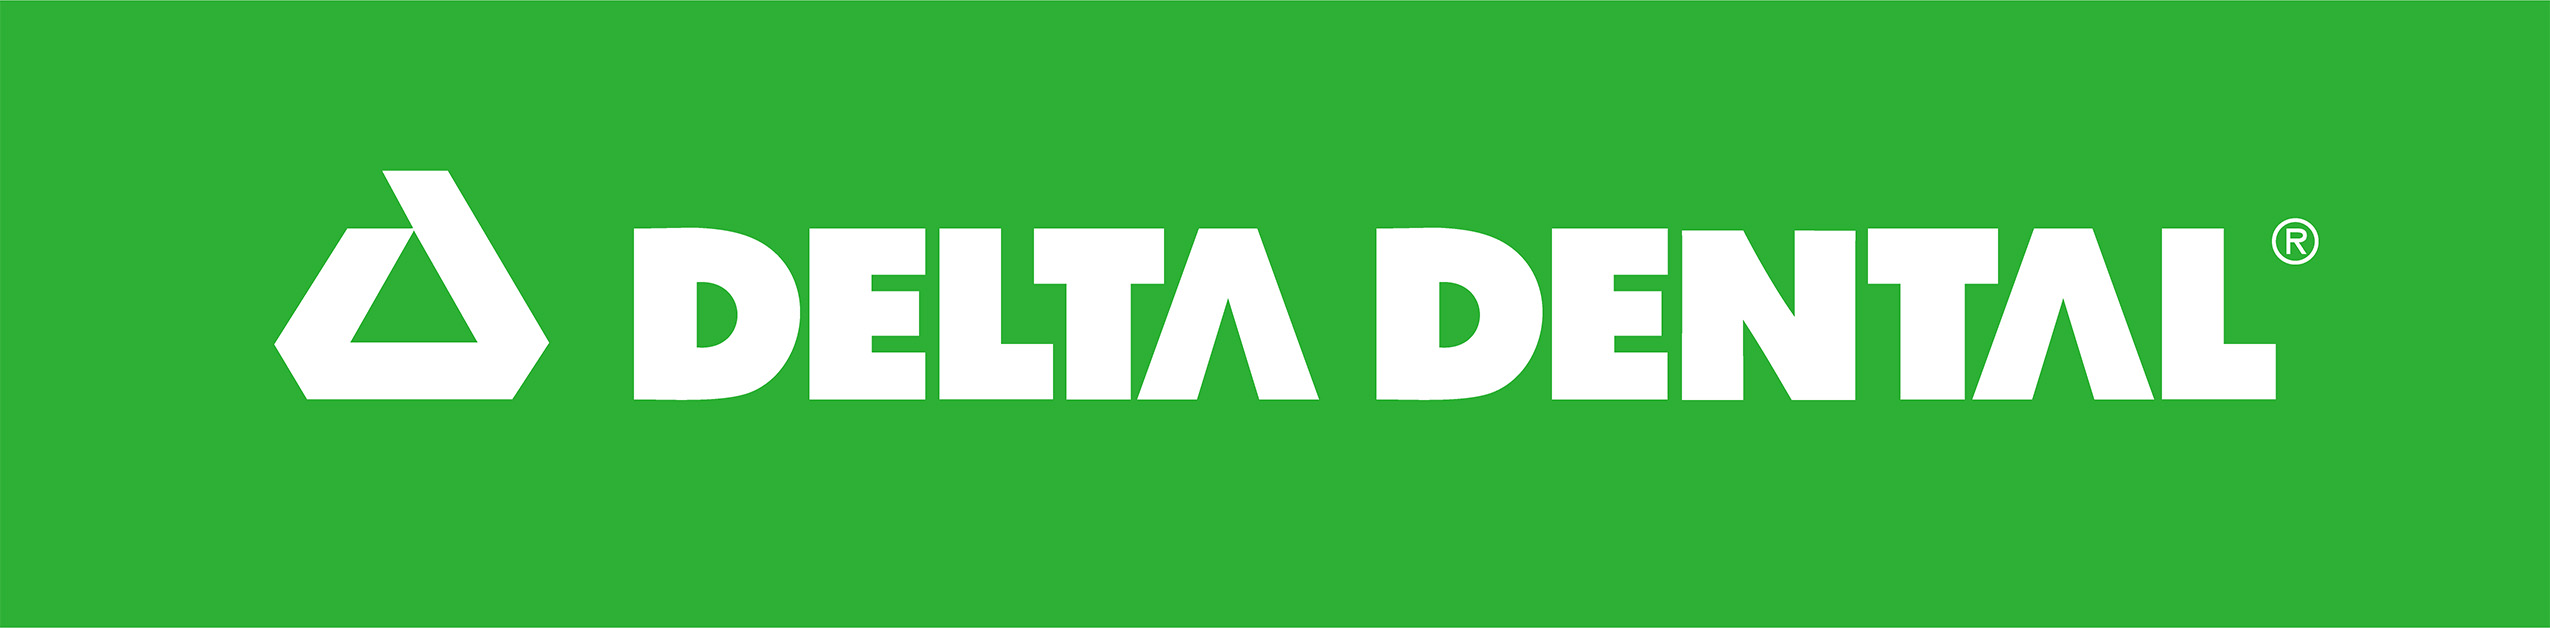 Delta dental logo on a green background.